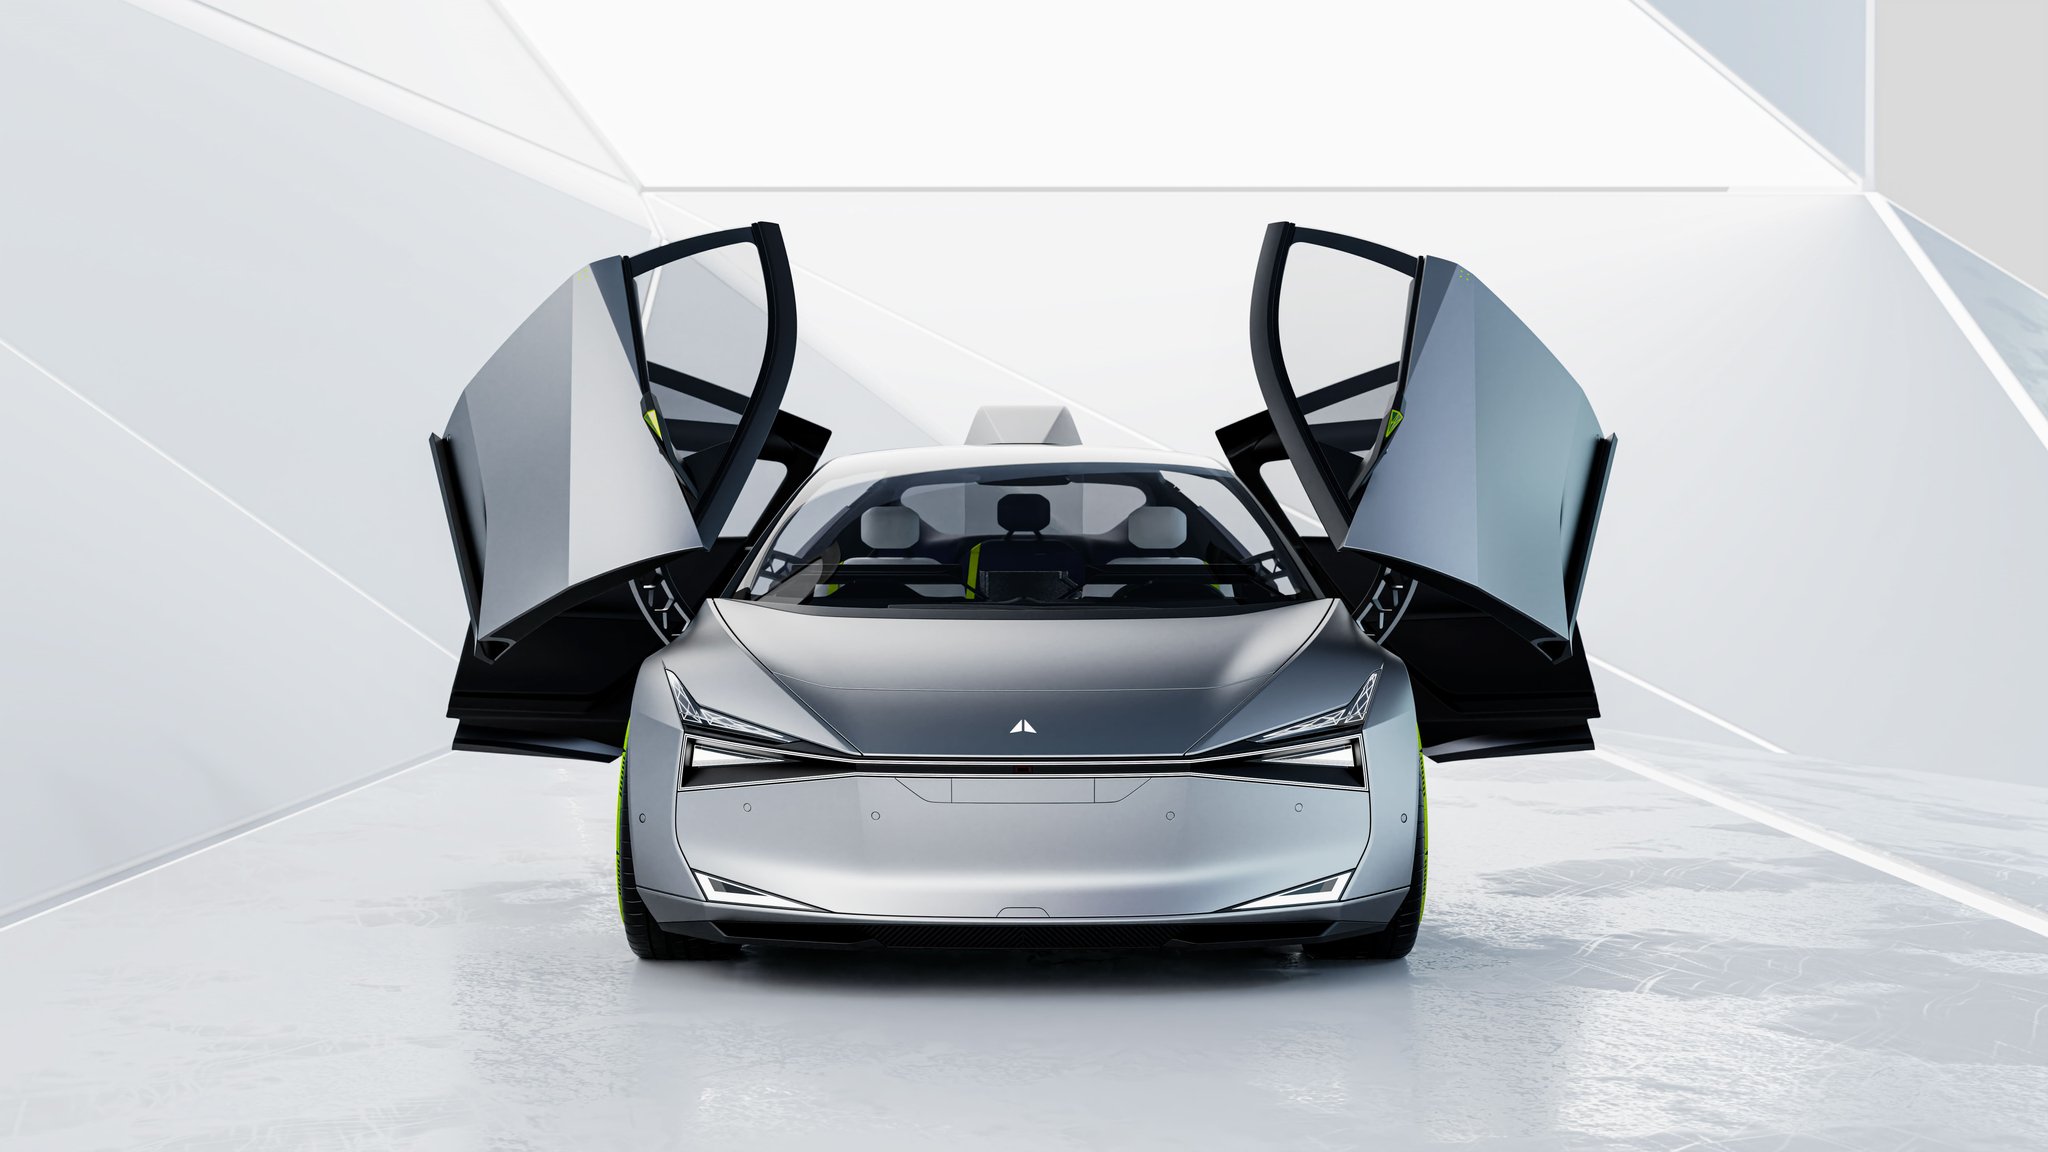 WayRay Holograktor: futuristic autonomous taxi unveiled